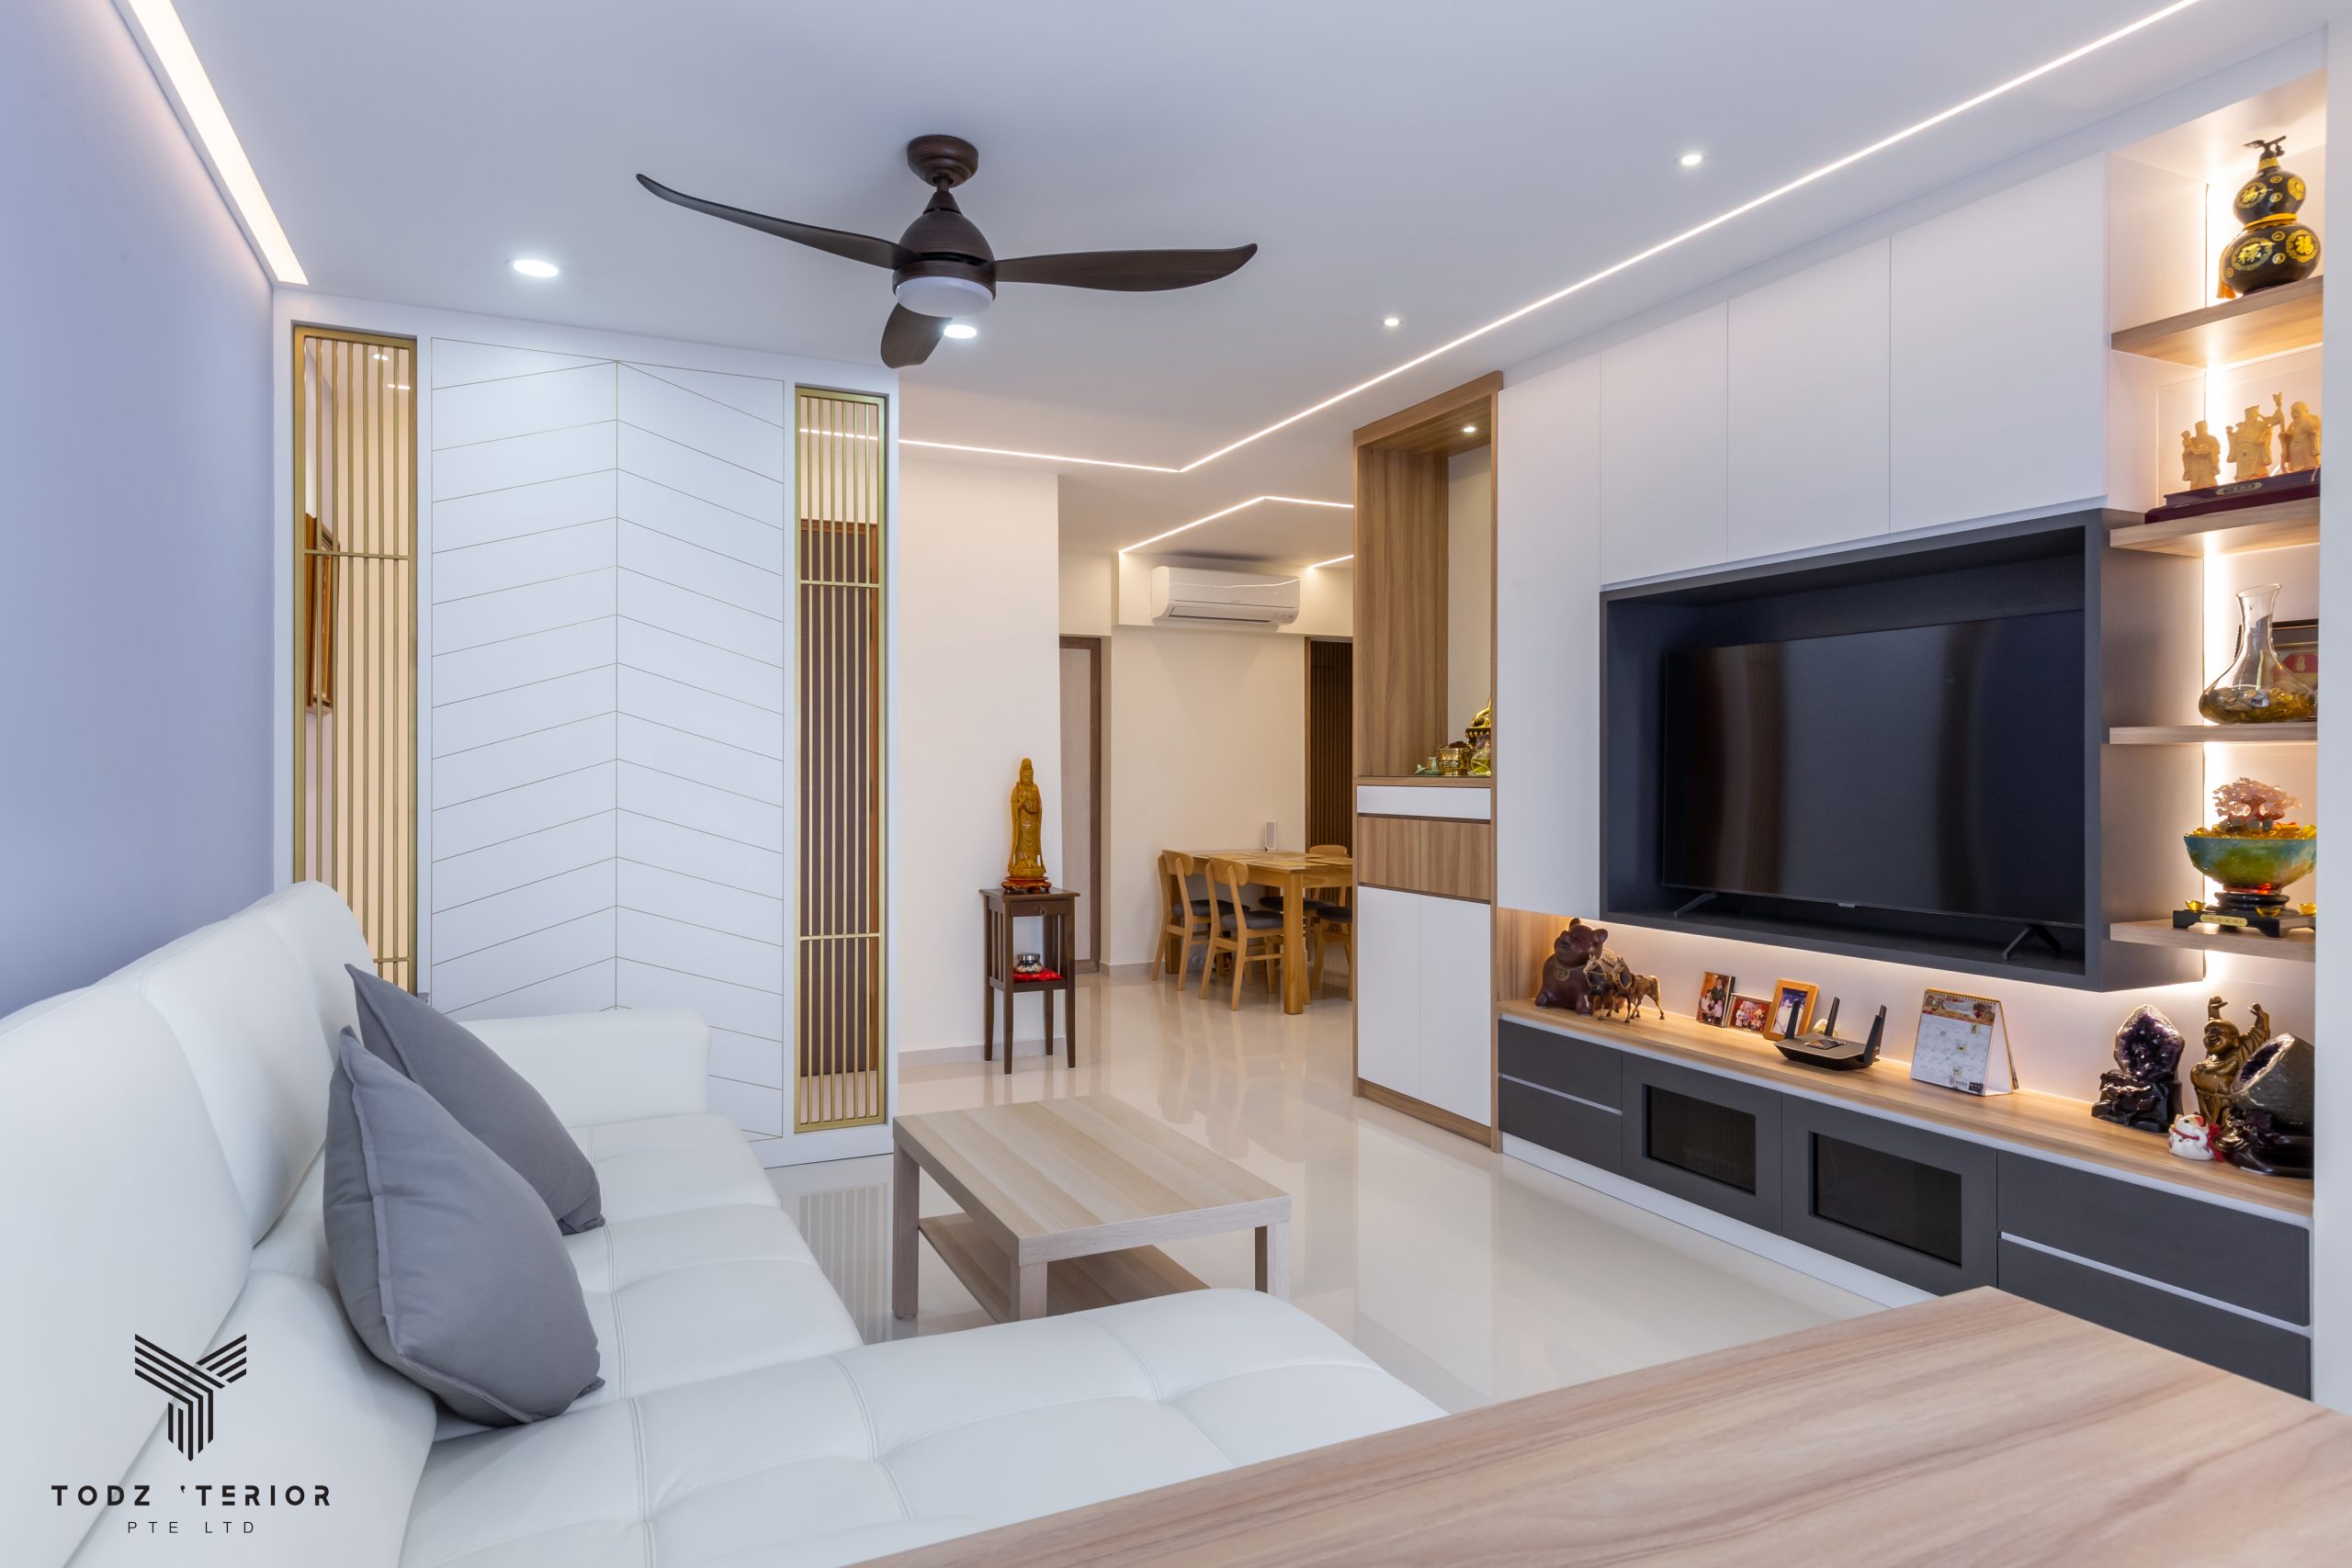 hdb living room design singapore